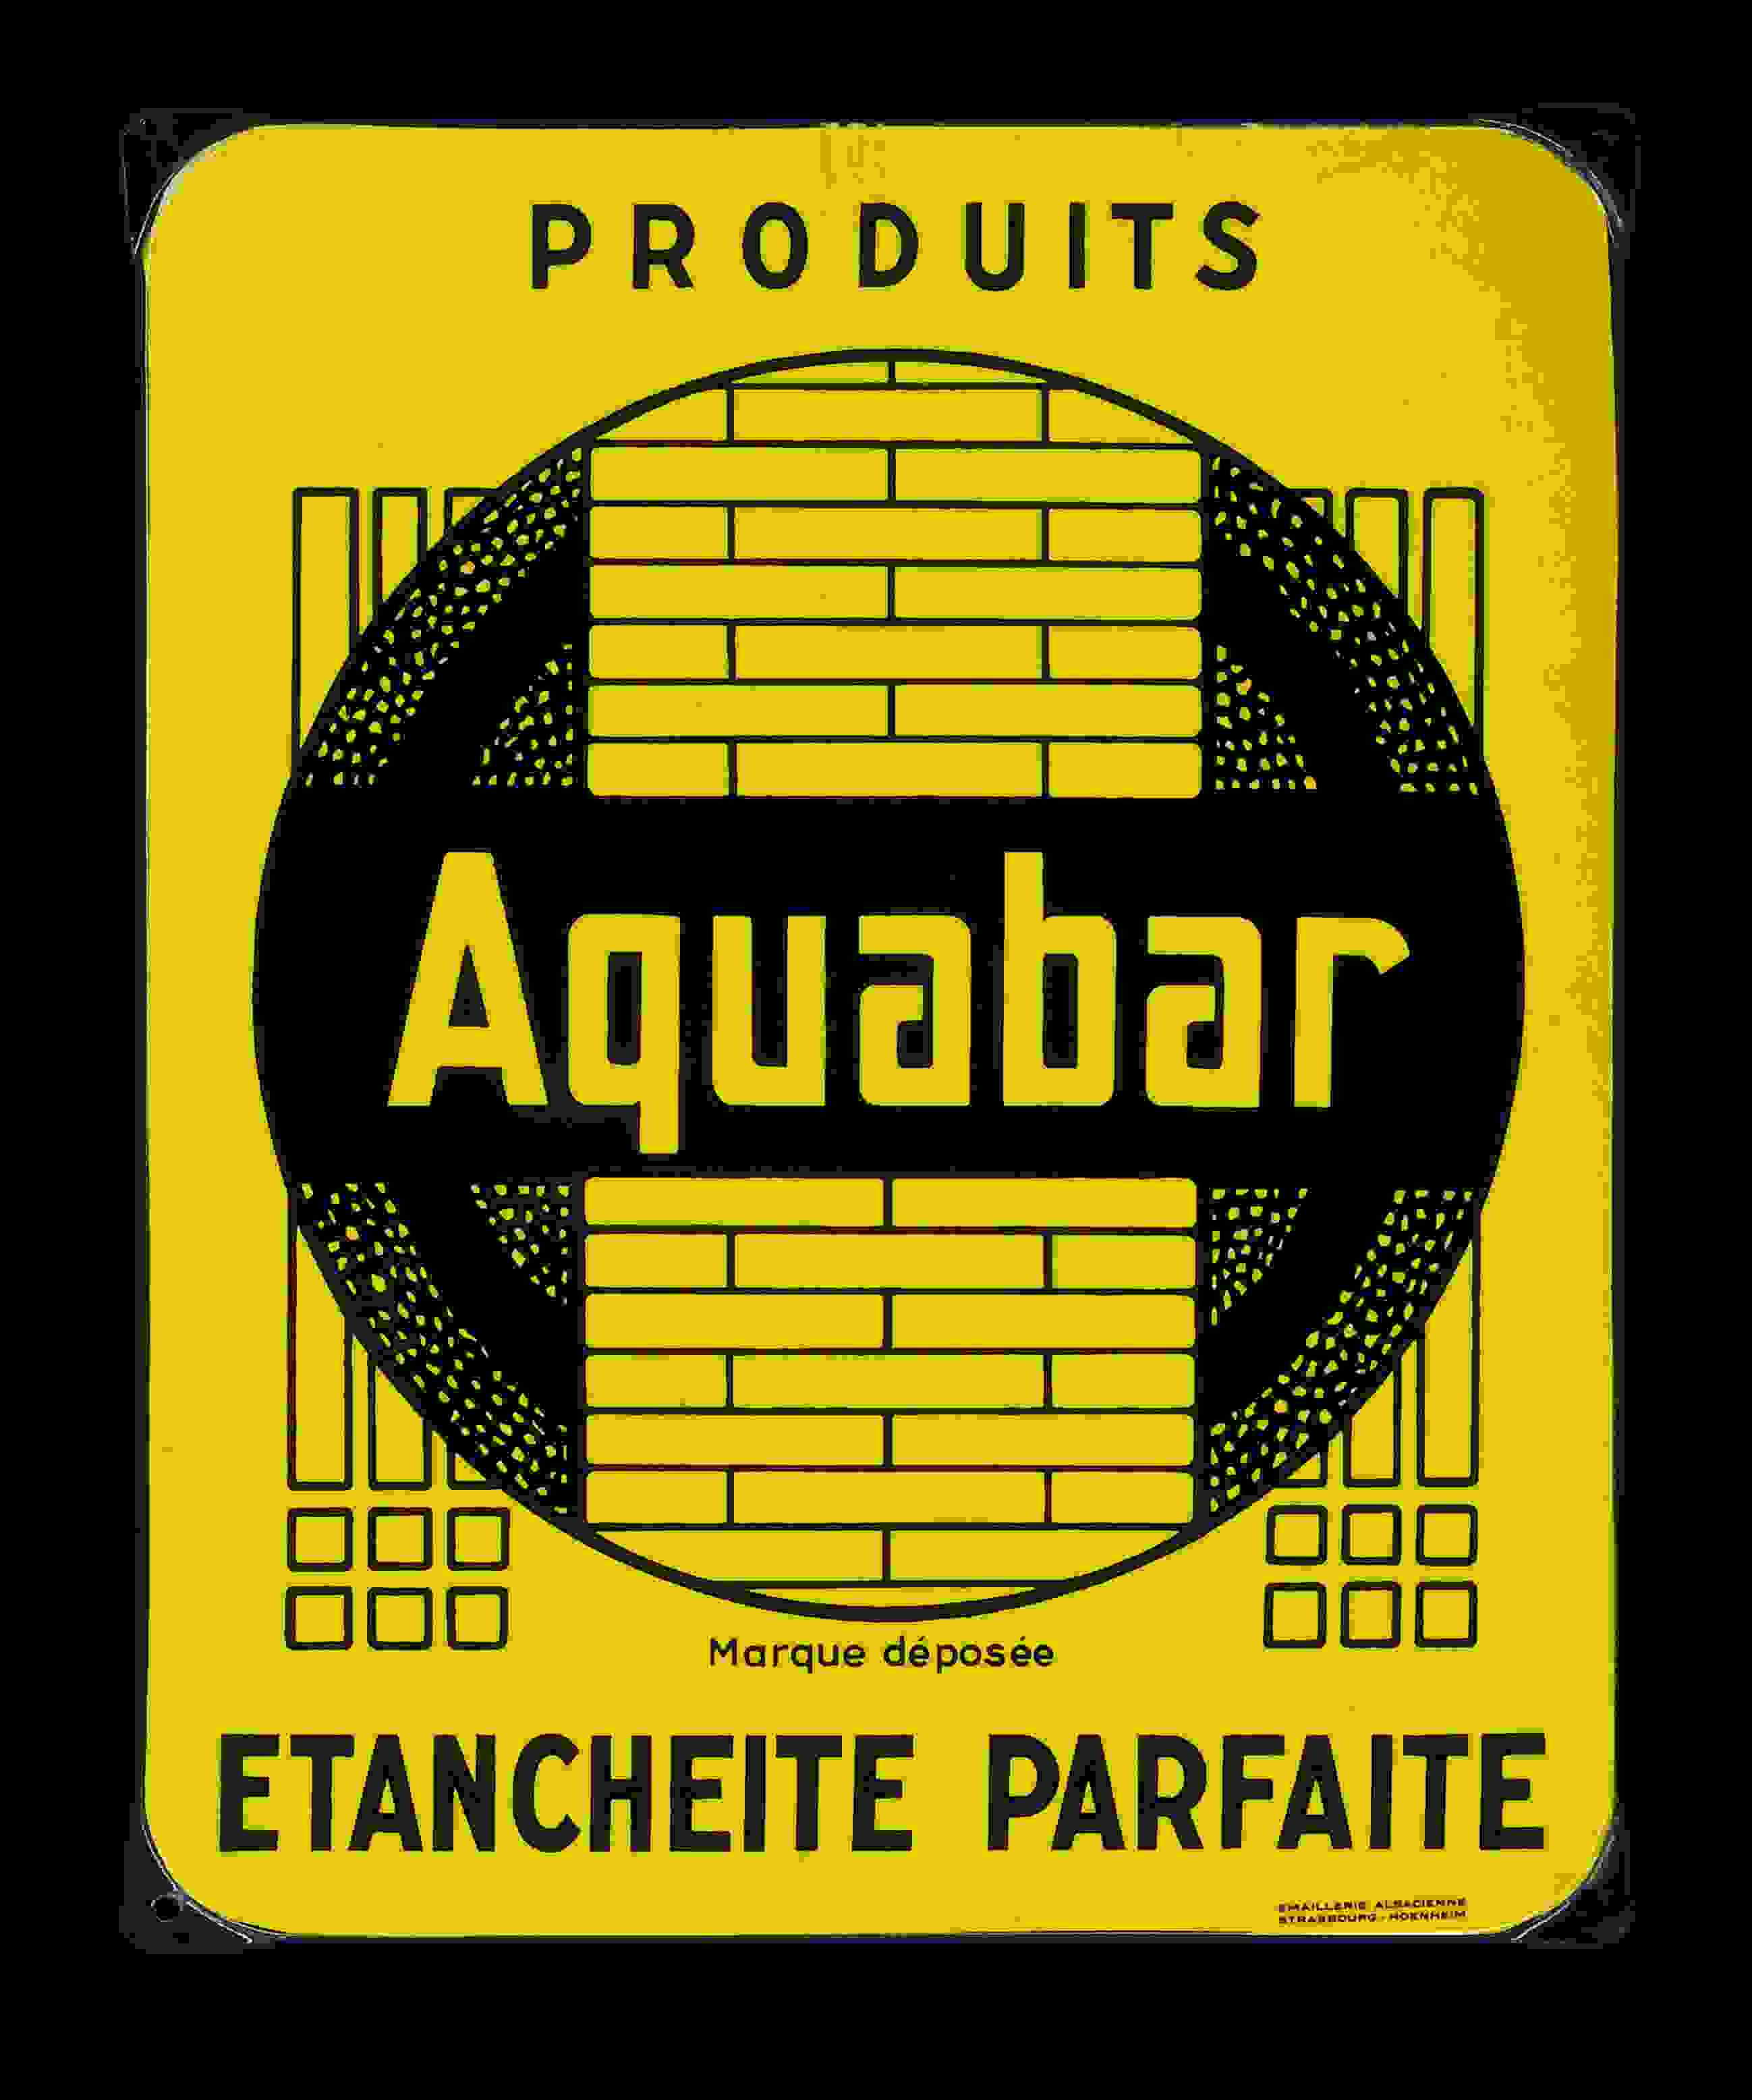 Aquarbar 